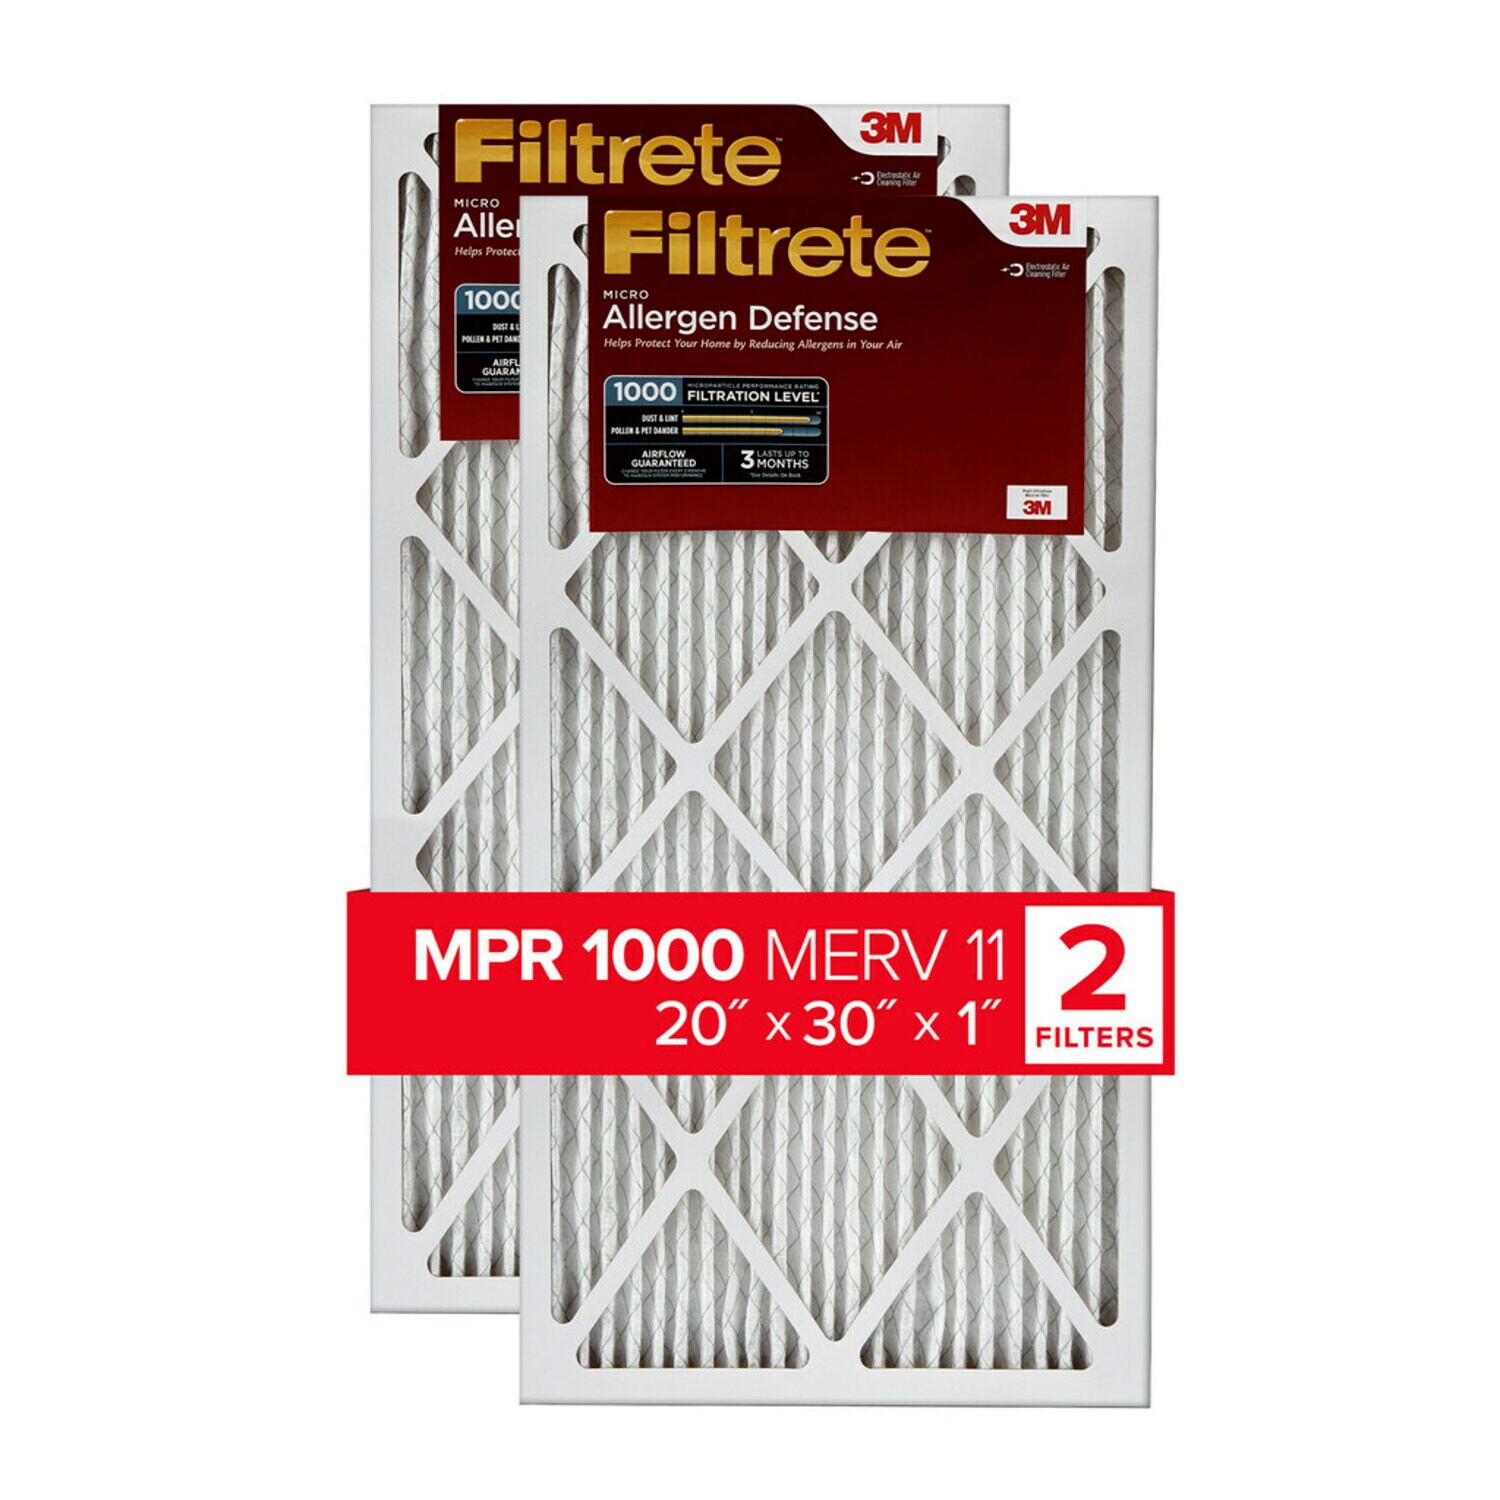 7100212146 - Filtrete Allergen Defense Filter AD22-2PK-1E, 20 in x 30 in x 1 in (50.8 cm x 76.2 cm x 2.5 cm) ,